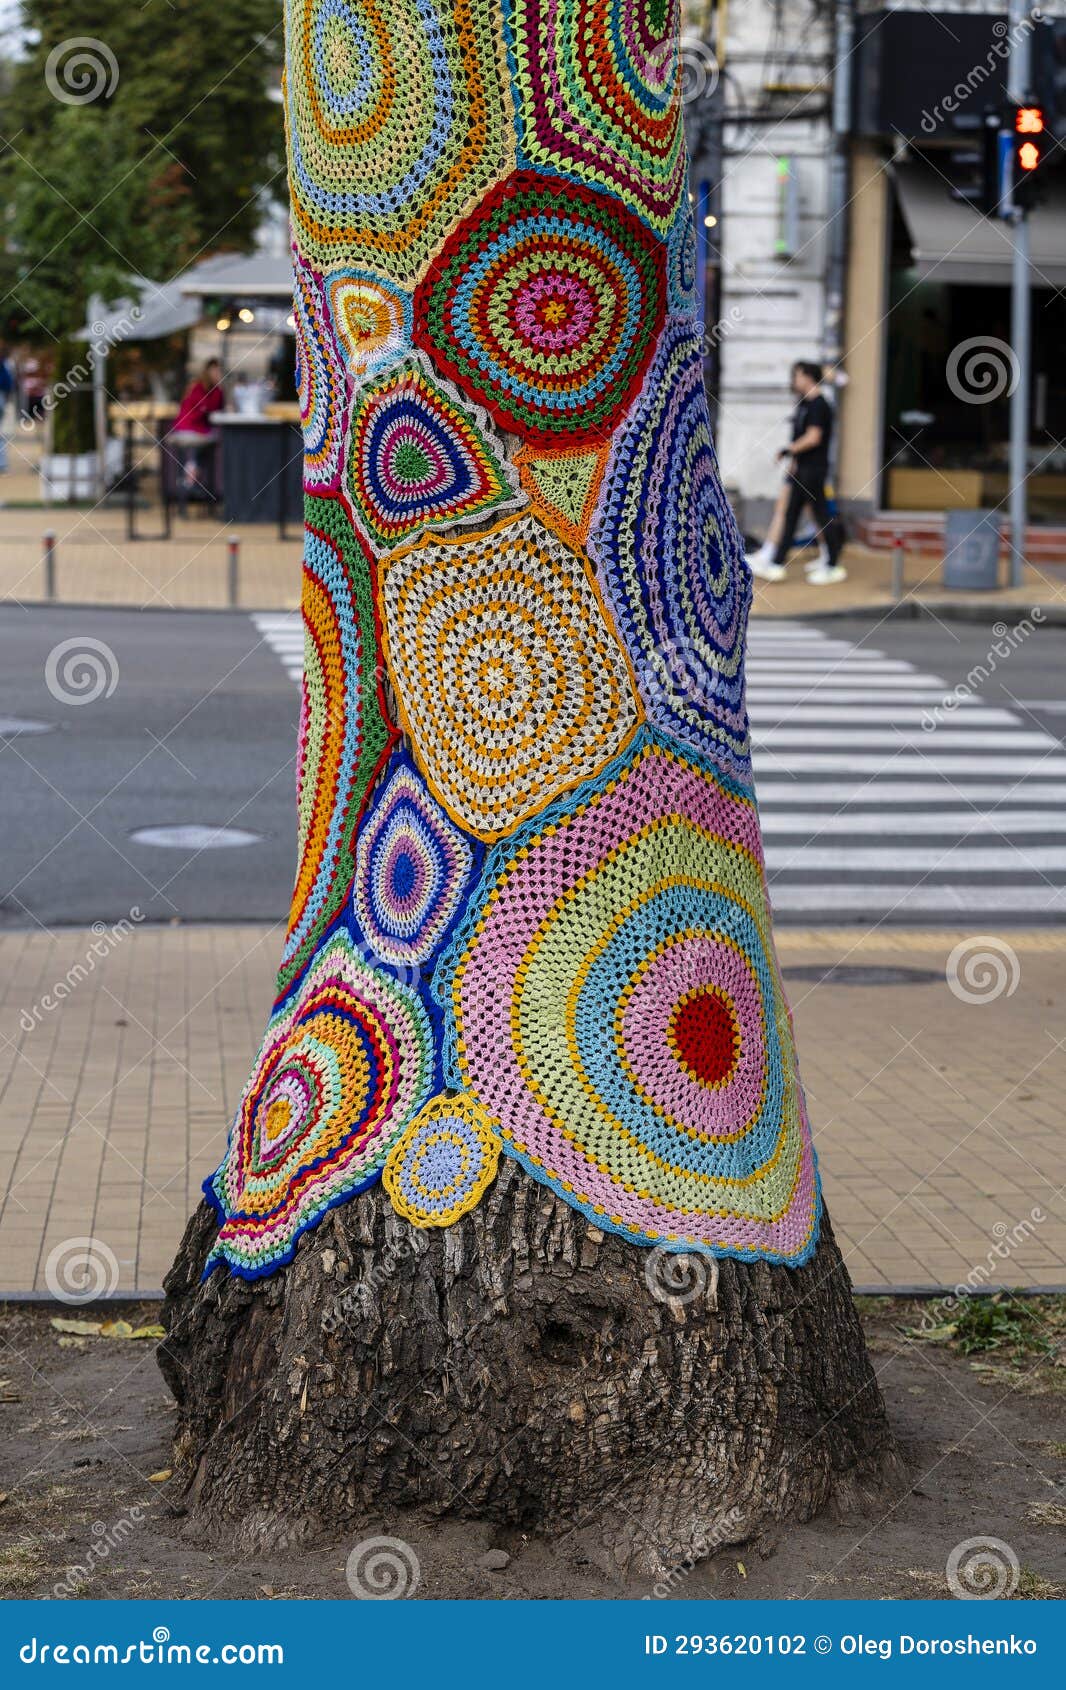 https://thumbs.dreamstime.com/z/colorful-crochet-knit-tree-trunk-kyiv-ukraine-street-art-goes-different-names-graffiti-knitting-yarn-bombing-abstract-293620102.jpg